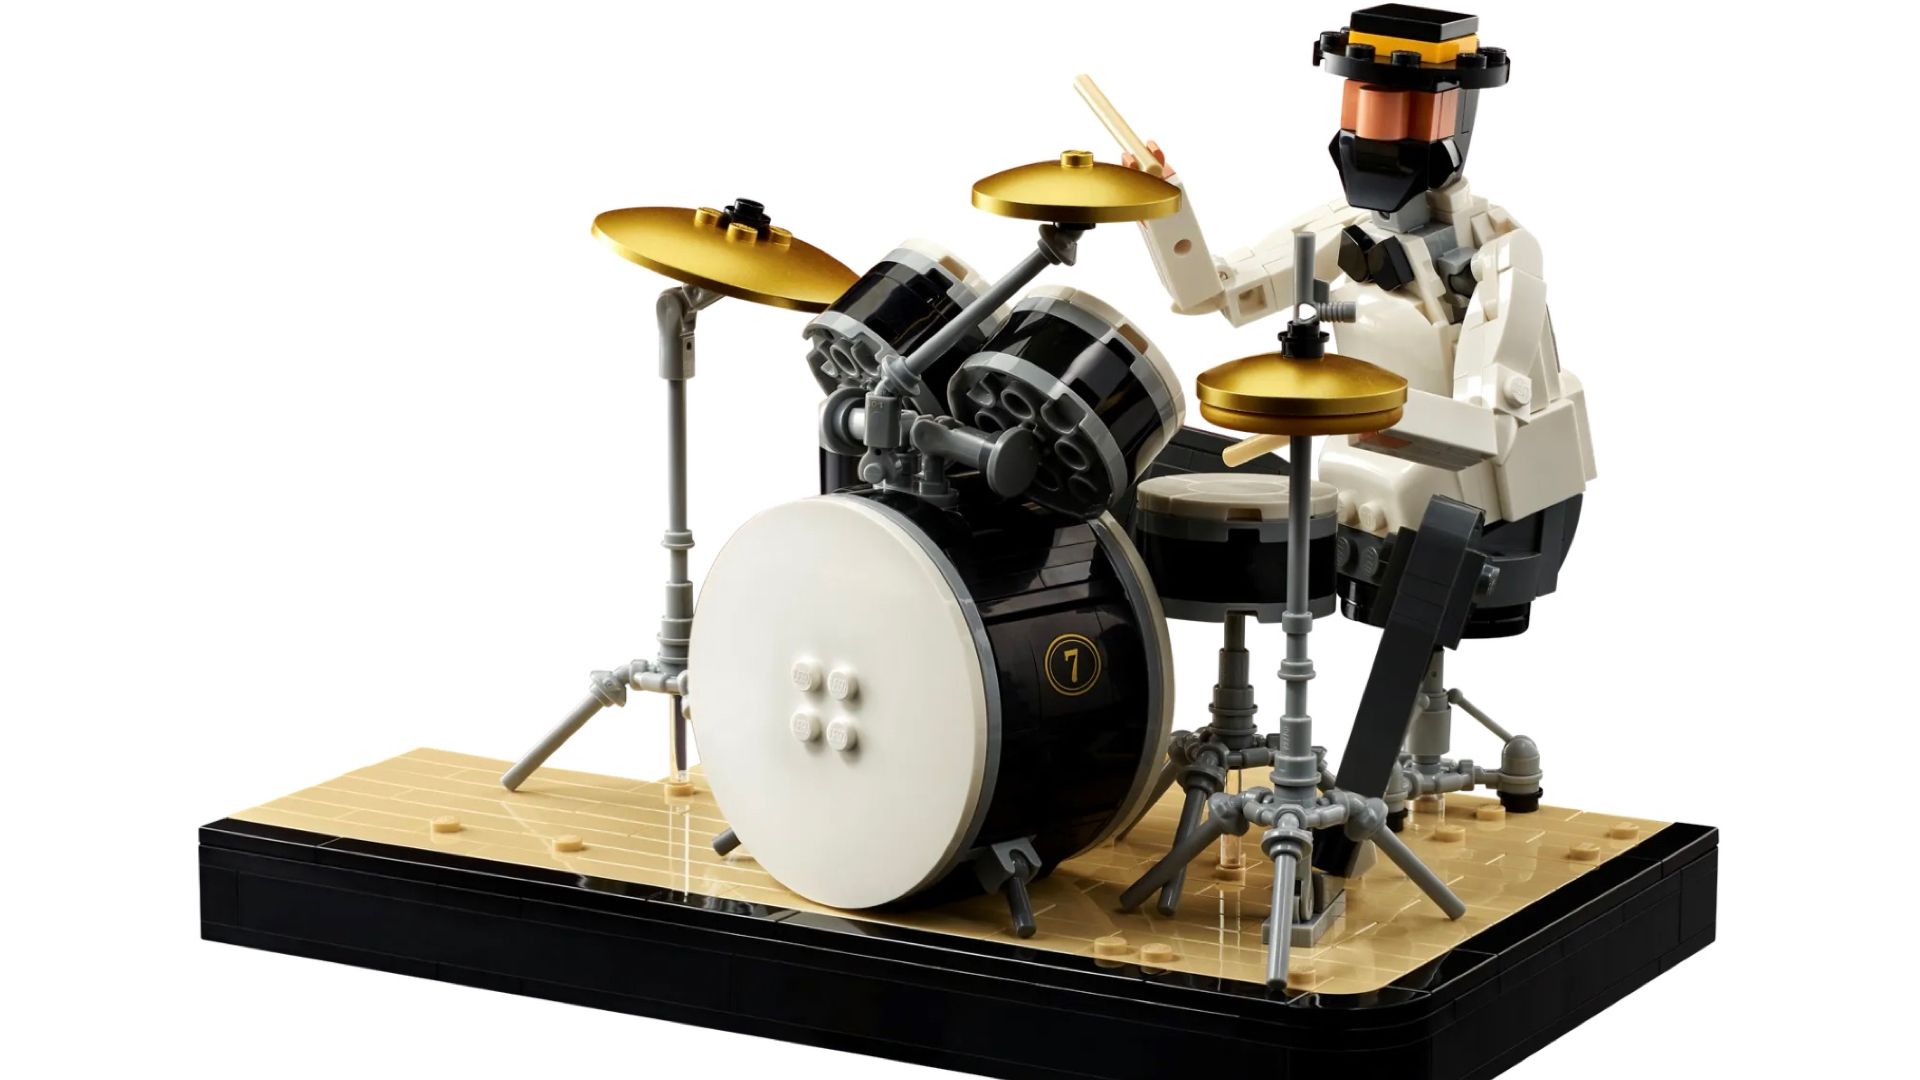 LEGO Ideas Drummer and Drum set